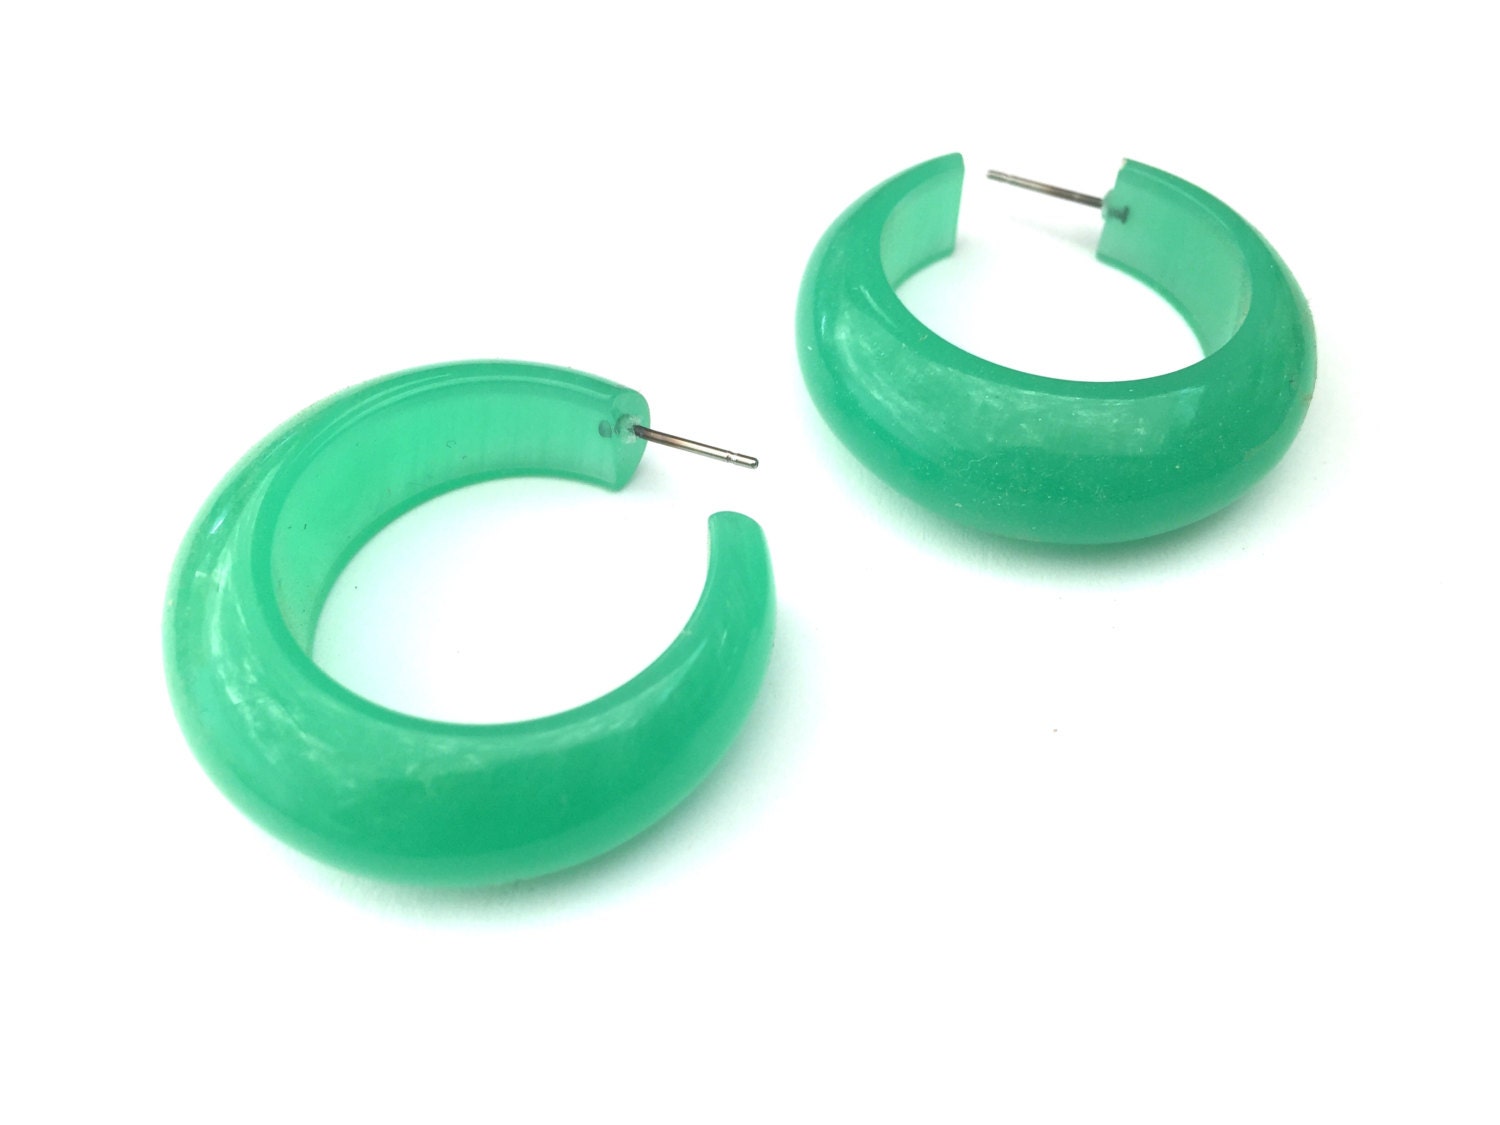 Big Green Hoop Earrings Vibrant Light Emerald Green Hoops